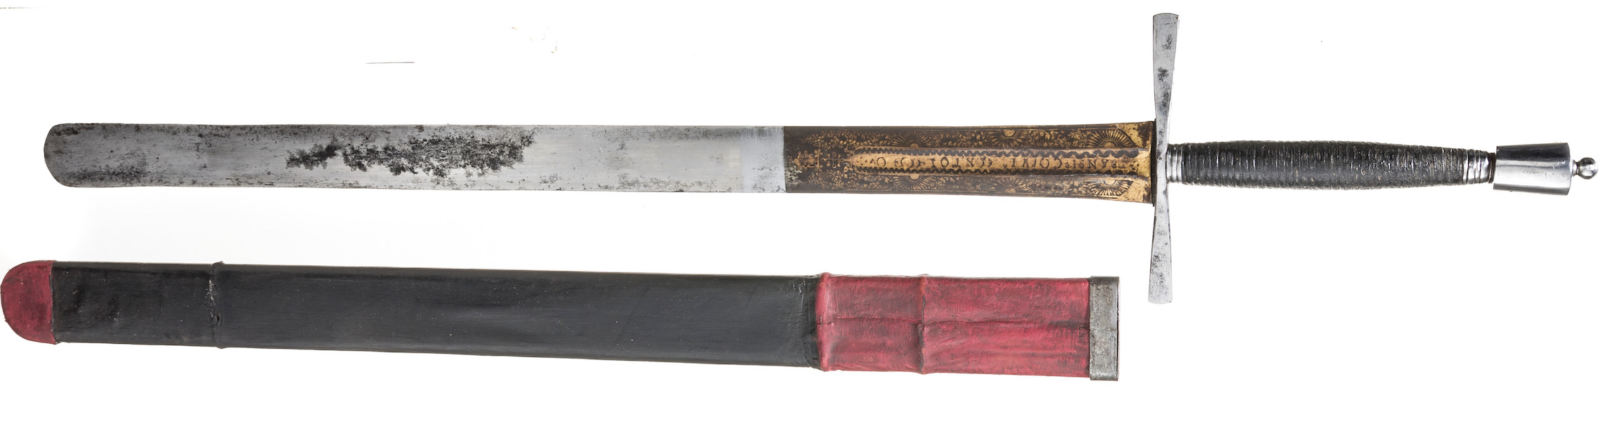 Circa-1800 executioner’s sword, €3,625